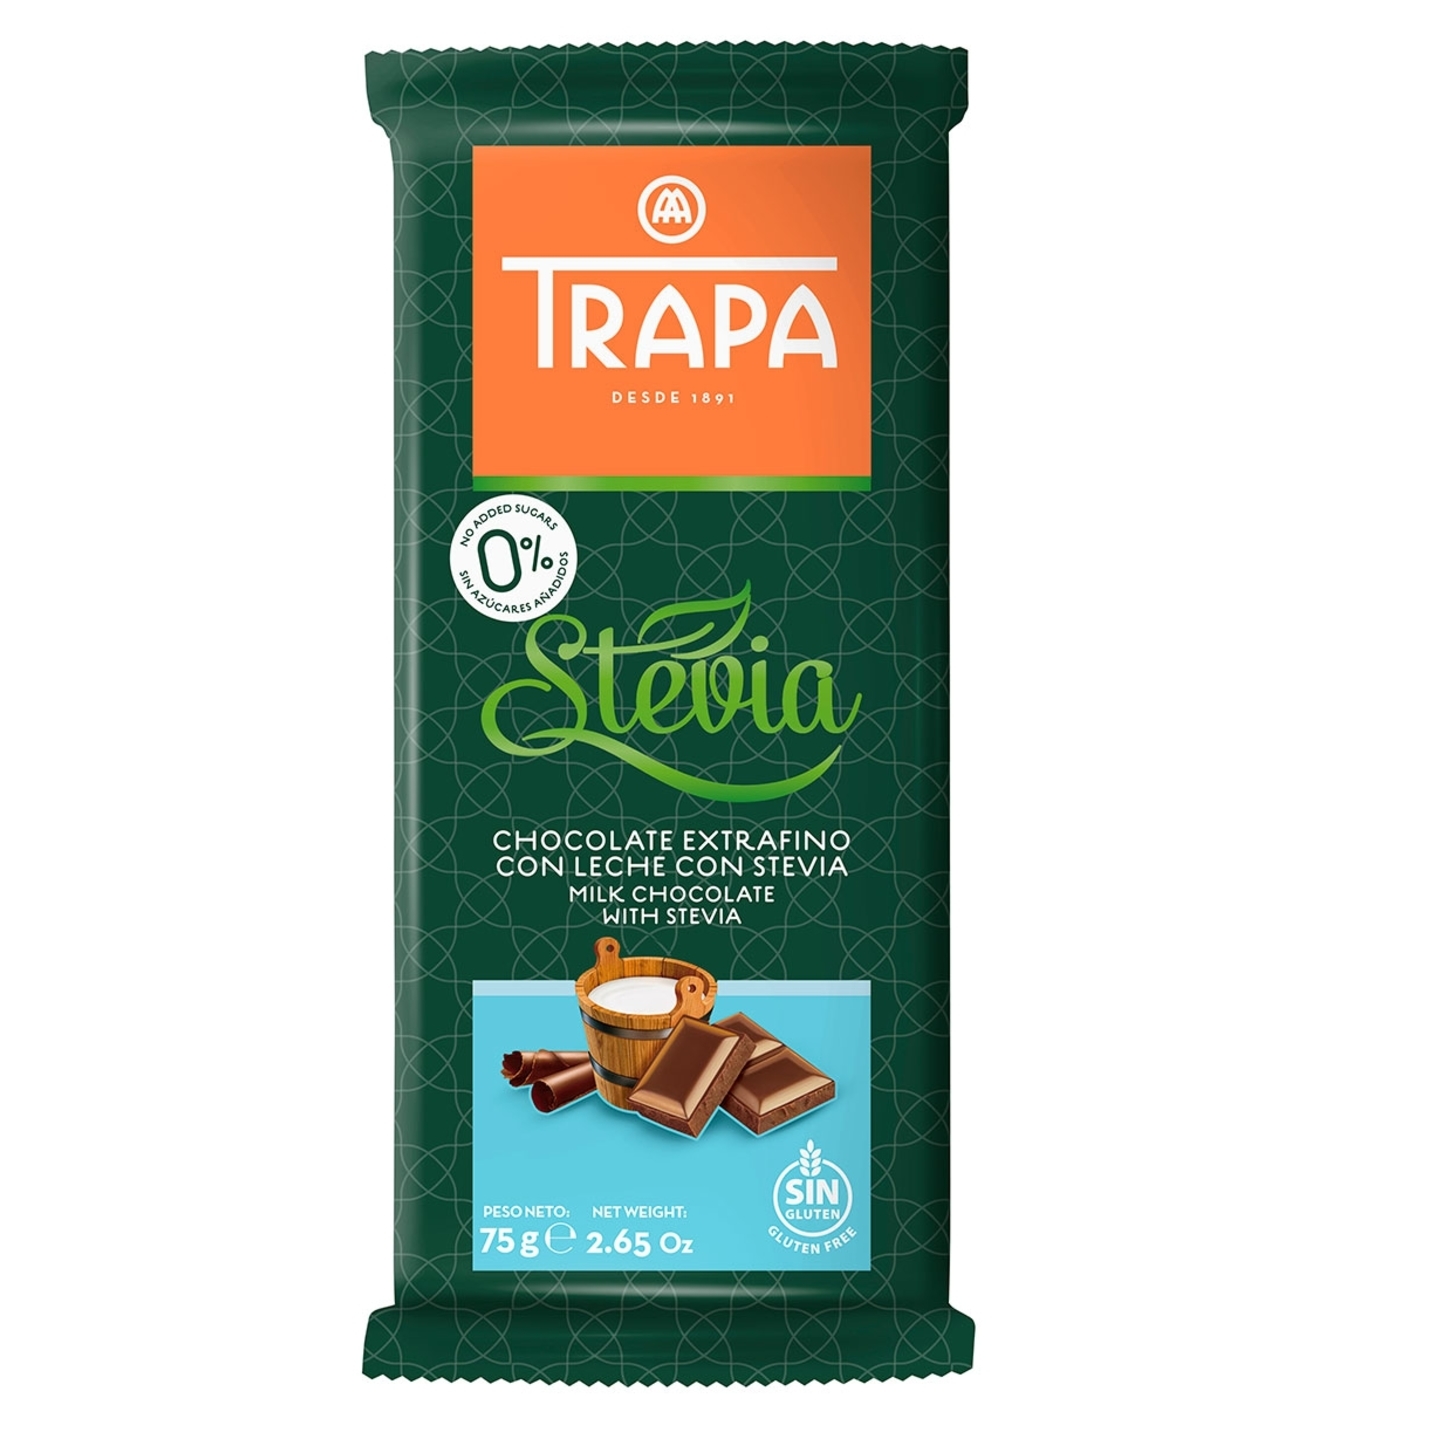 Trapa Sugar Free Milk Chocolate With Stevia - Gluten Free